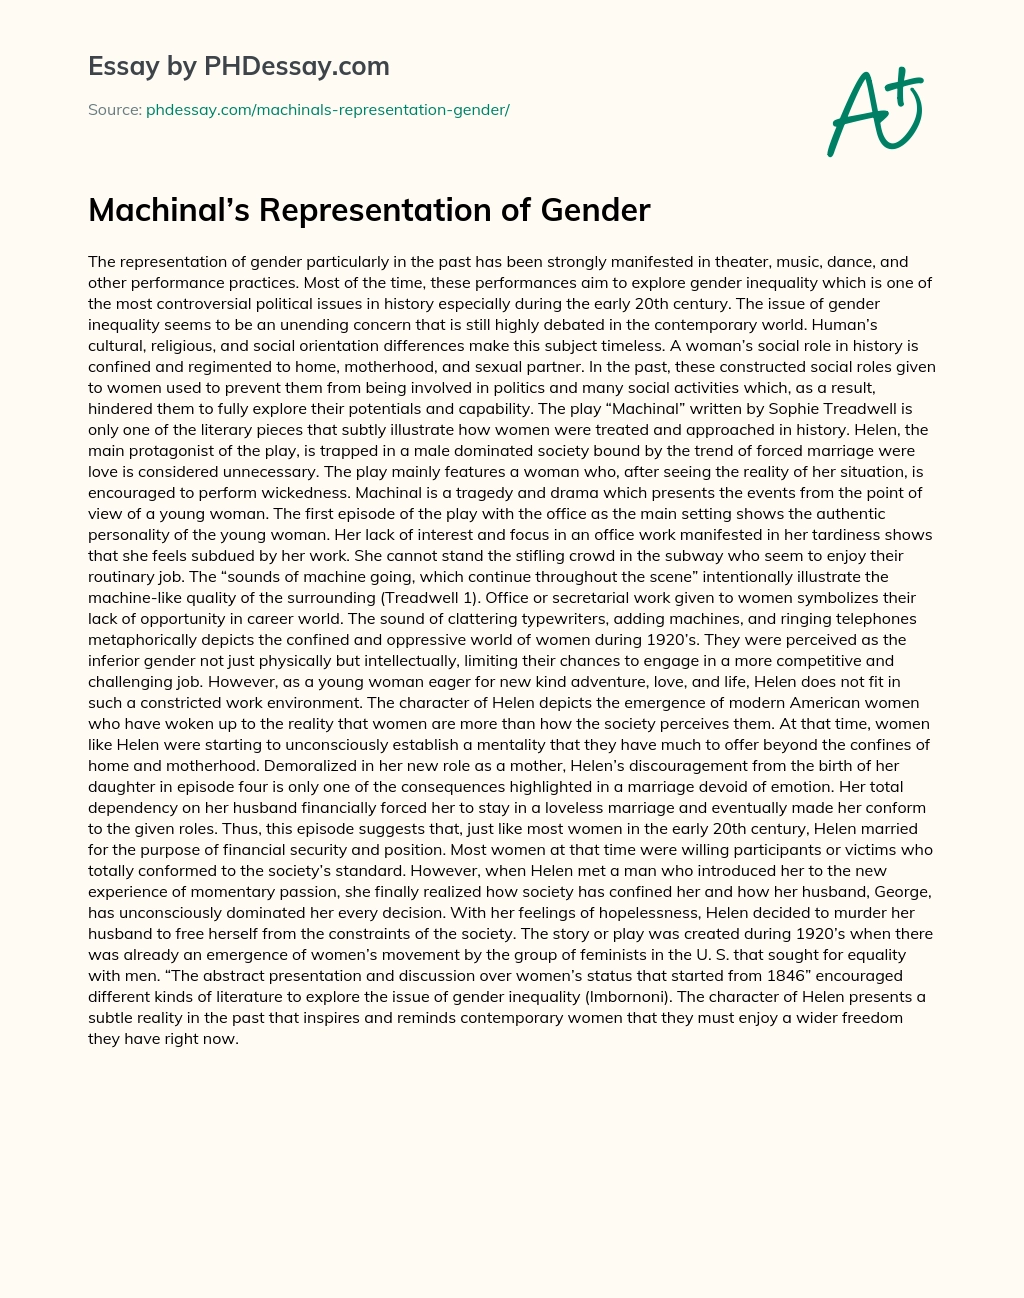 Machinal’s Representation of Gender essay